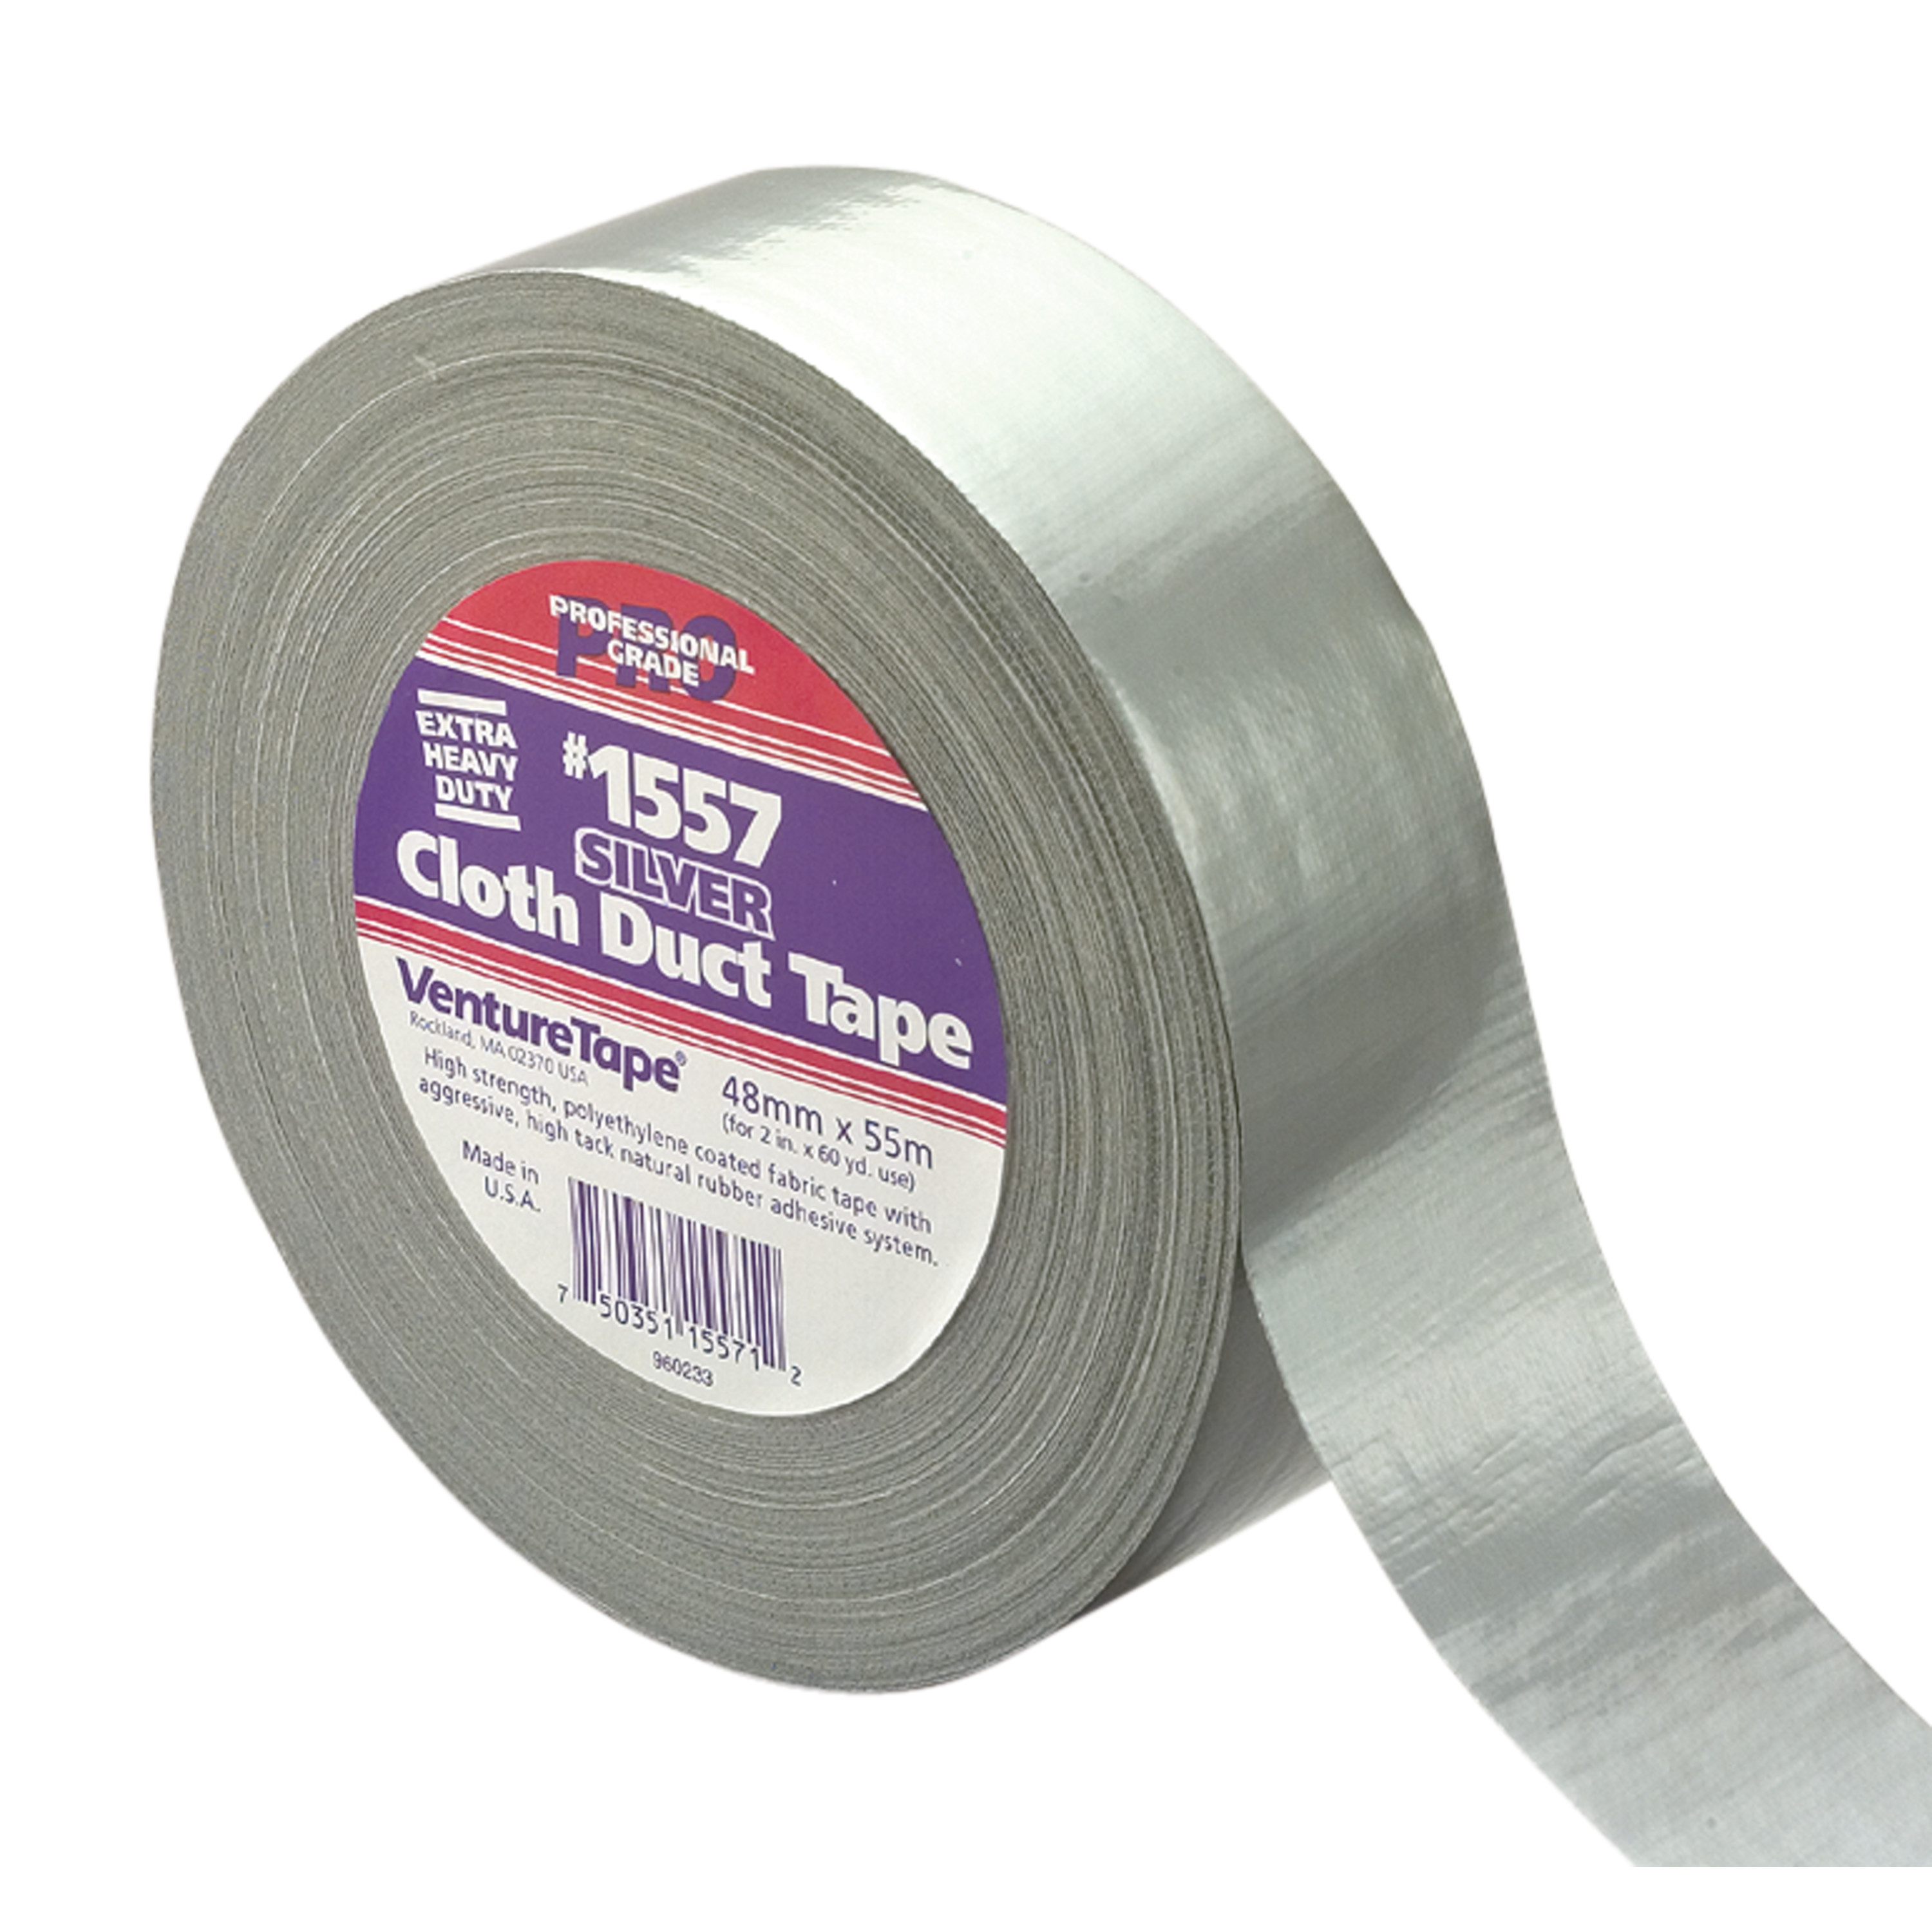 3M™ Venture Tape™ Xtreme Cloth Duct Tape 1557, Black, 48 mm x 55 m (1.88
in x 60.1 yd), 24 per case